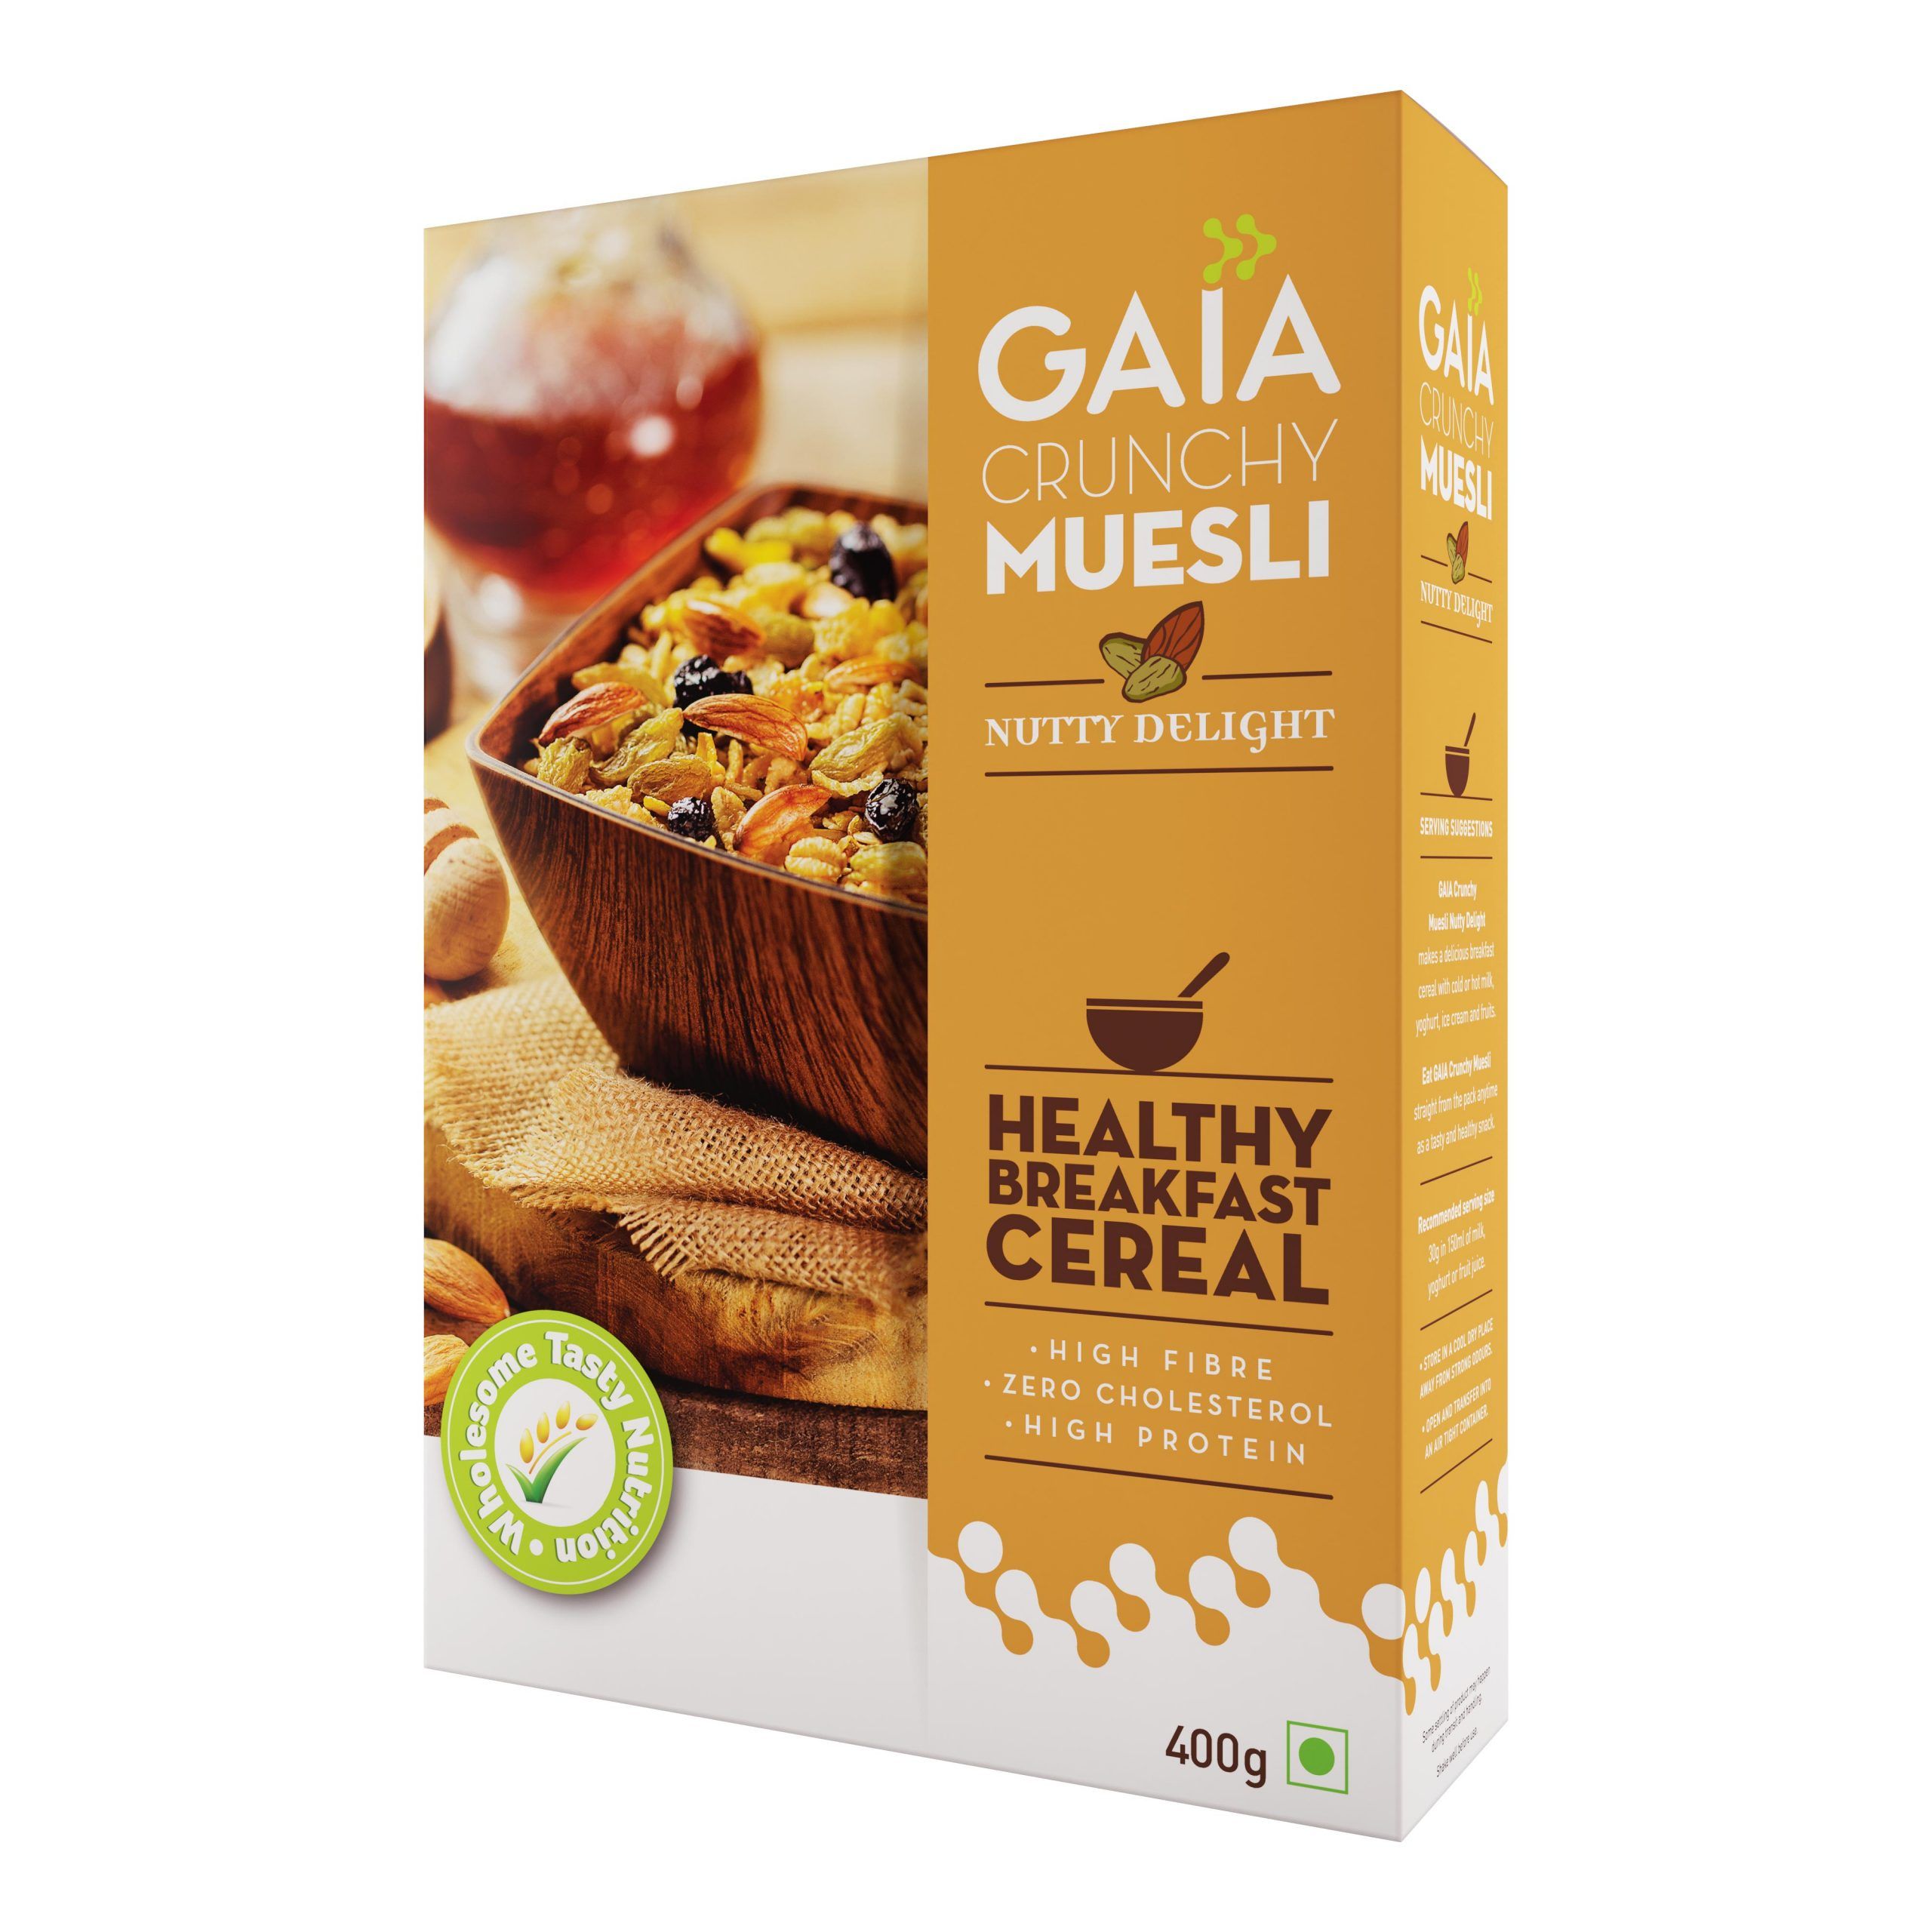 Gaia Crunchy Muesli – Nutty Delight Image